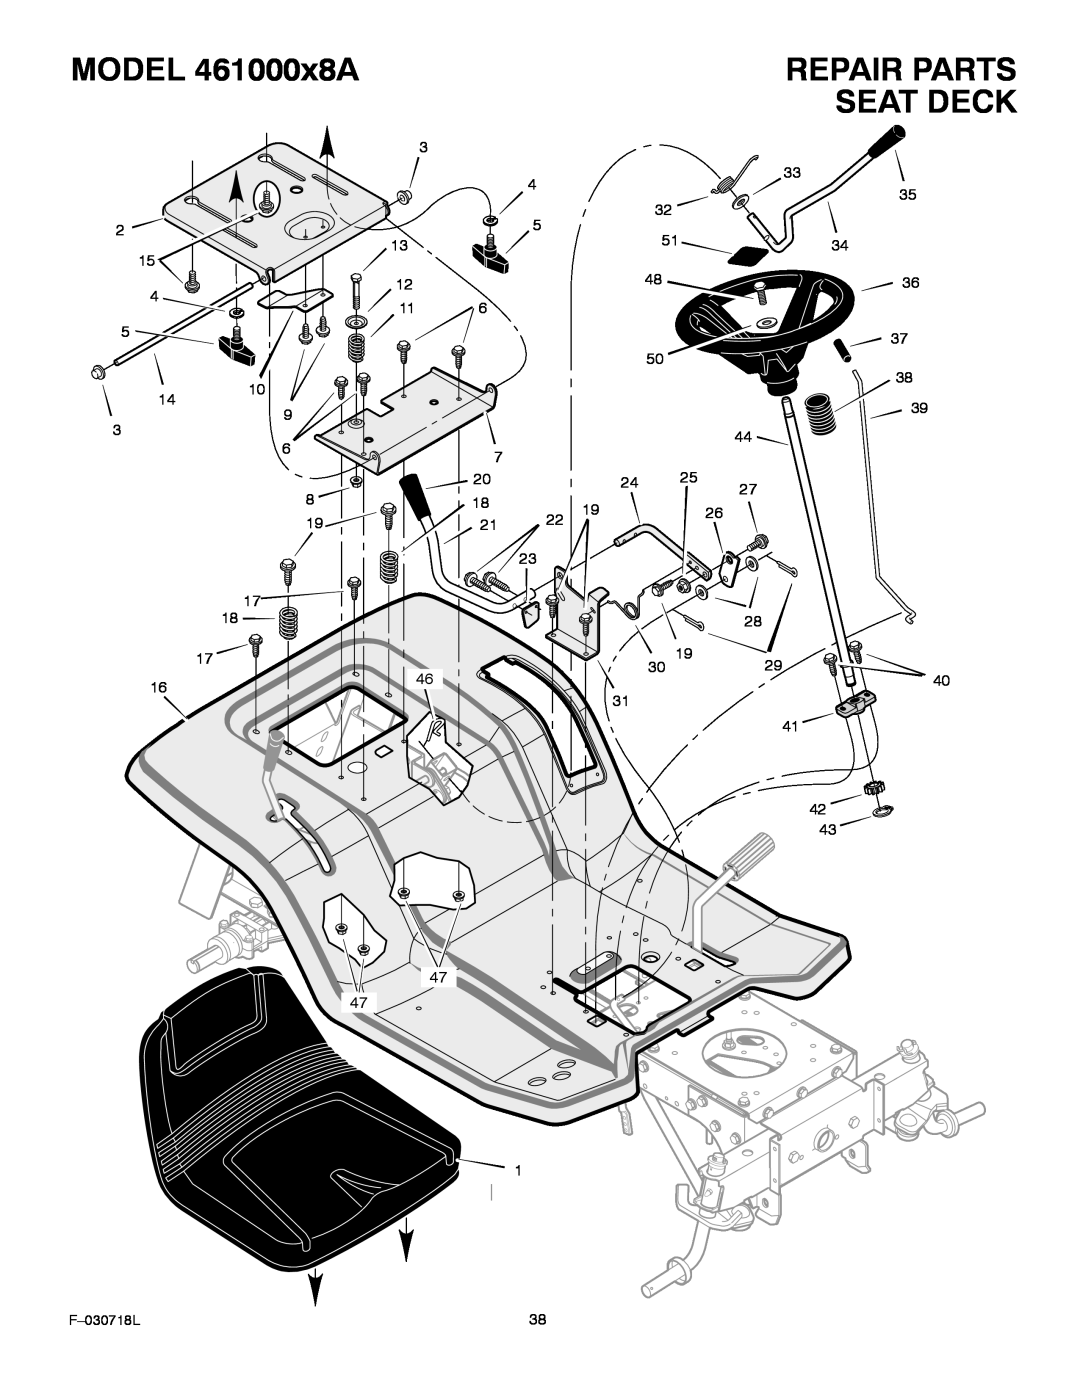 Murray manual MODEL 461000x8A, Seat Deck, Repair Parts 